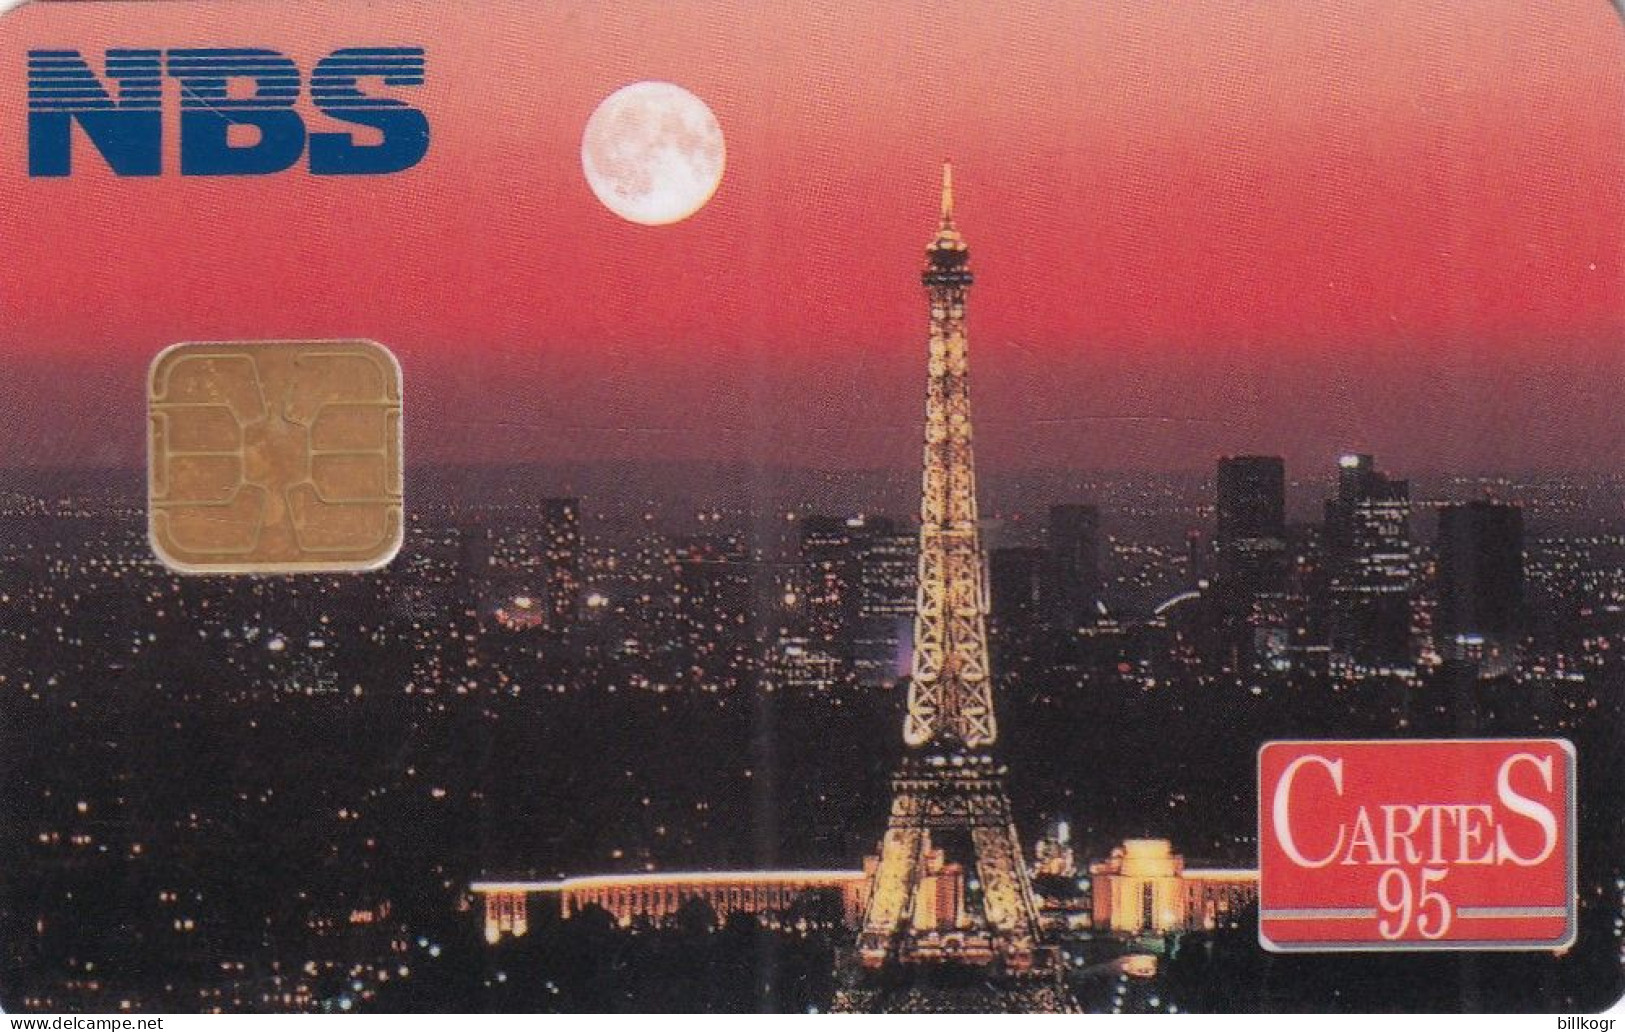 USA - Cartes 1995, NBS Demo Card - Cartes à Puce